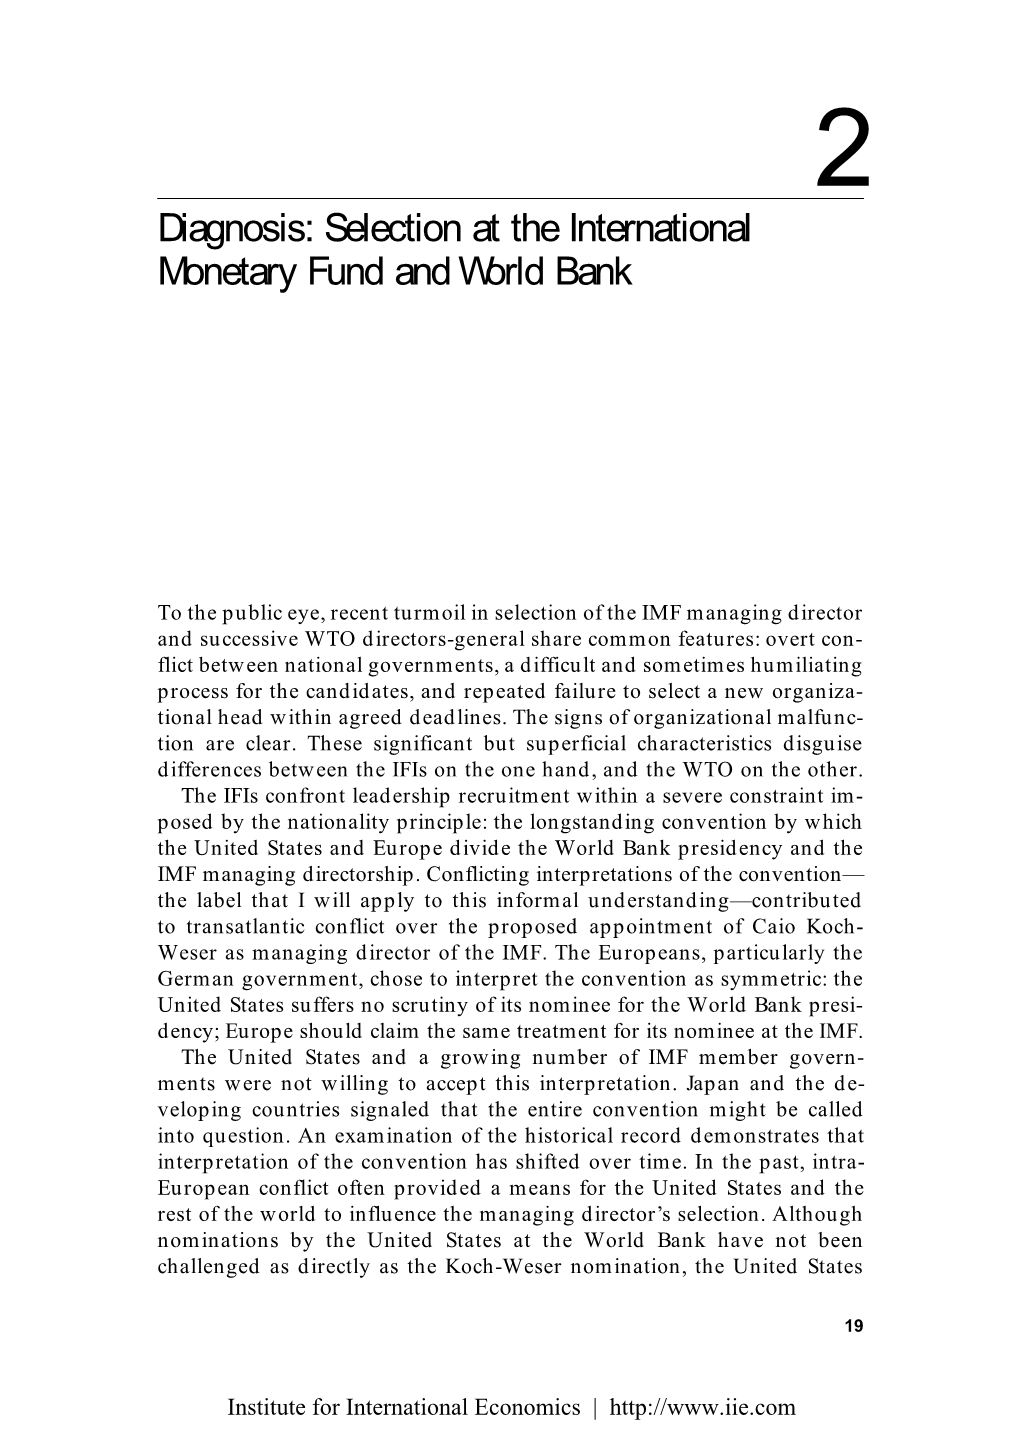 Selection at the International Monetary Fund and World Bank